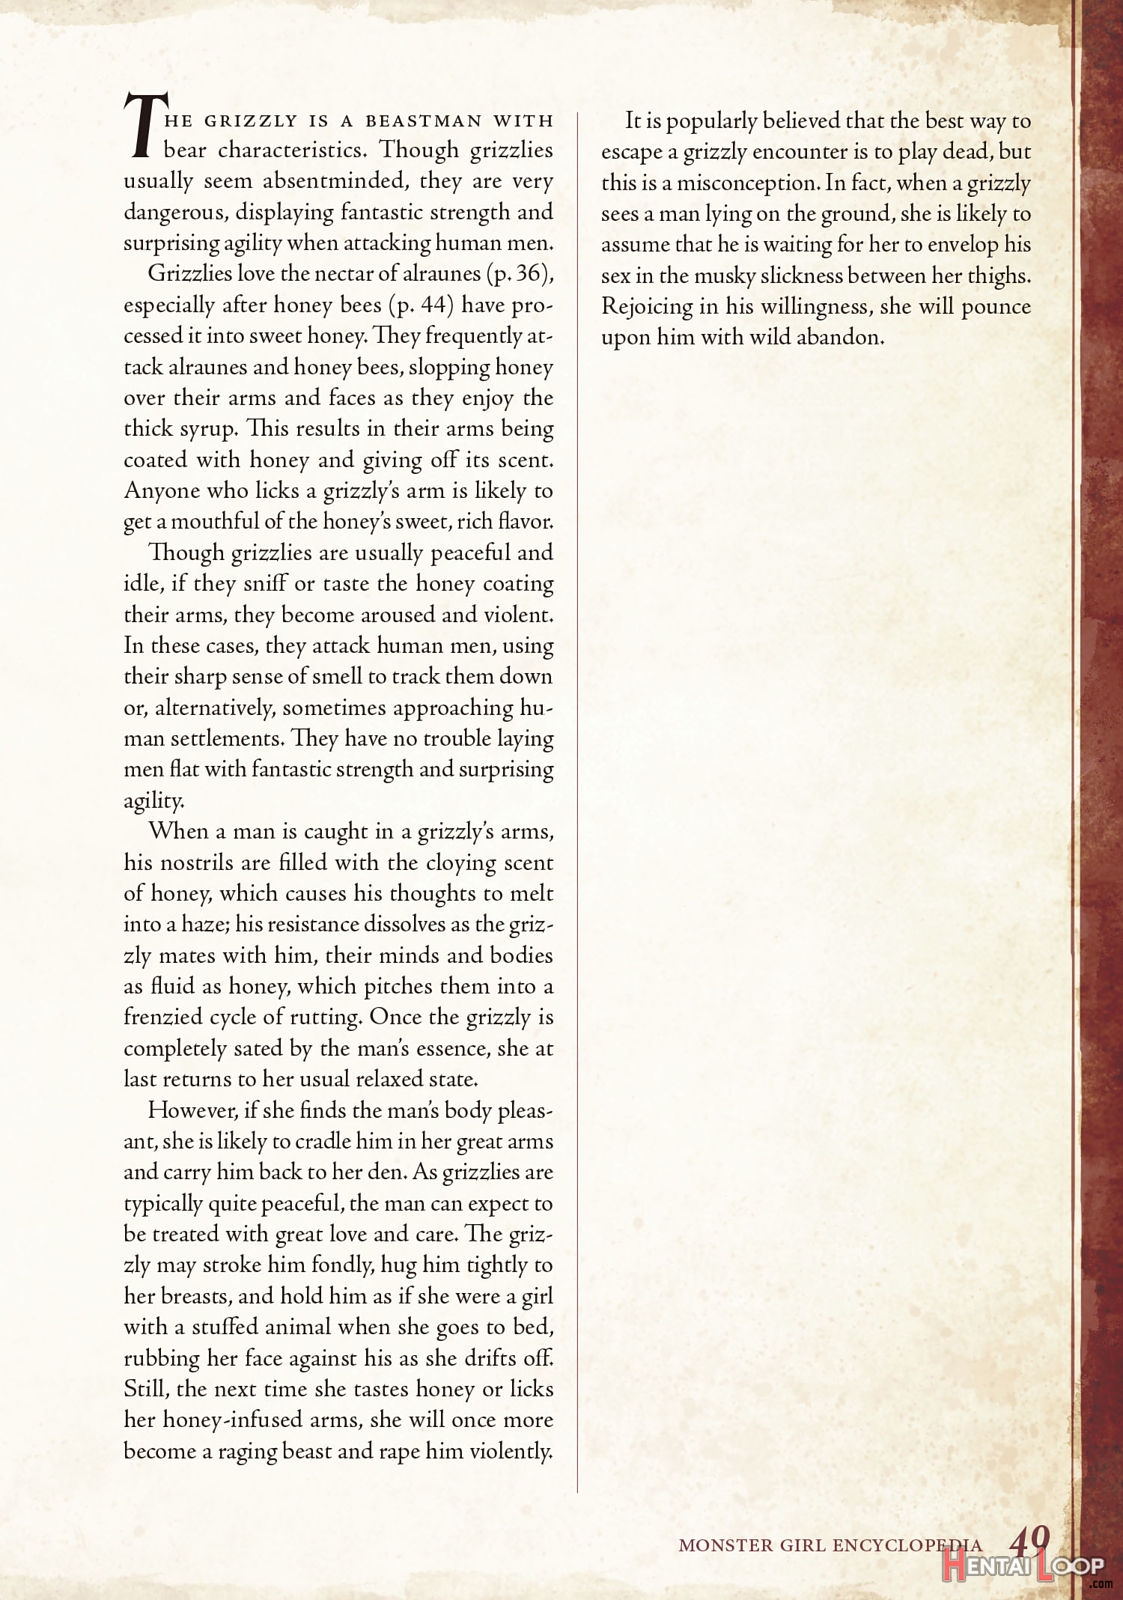 Monster Girl Encyclopedia Vol. 1 page 50